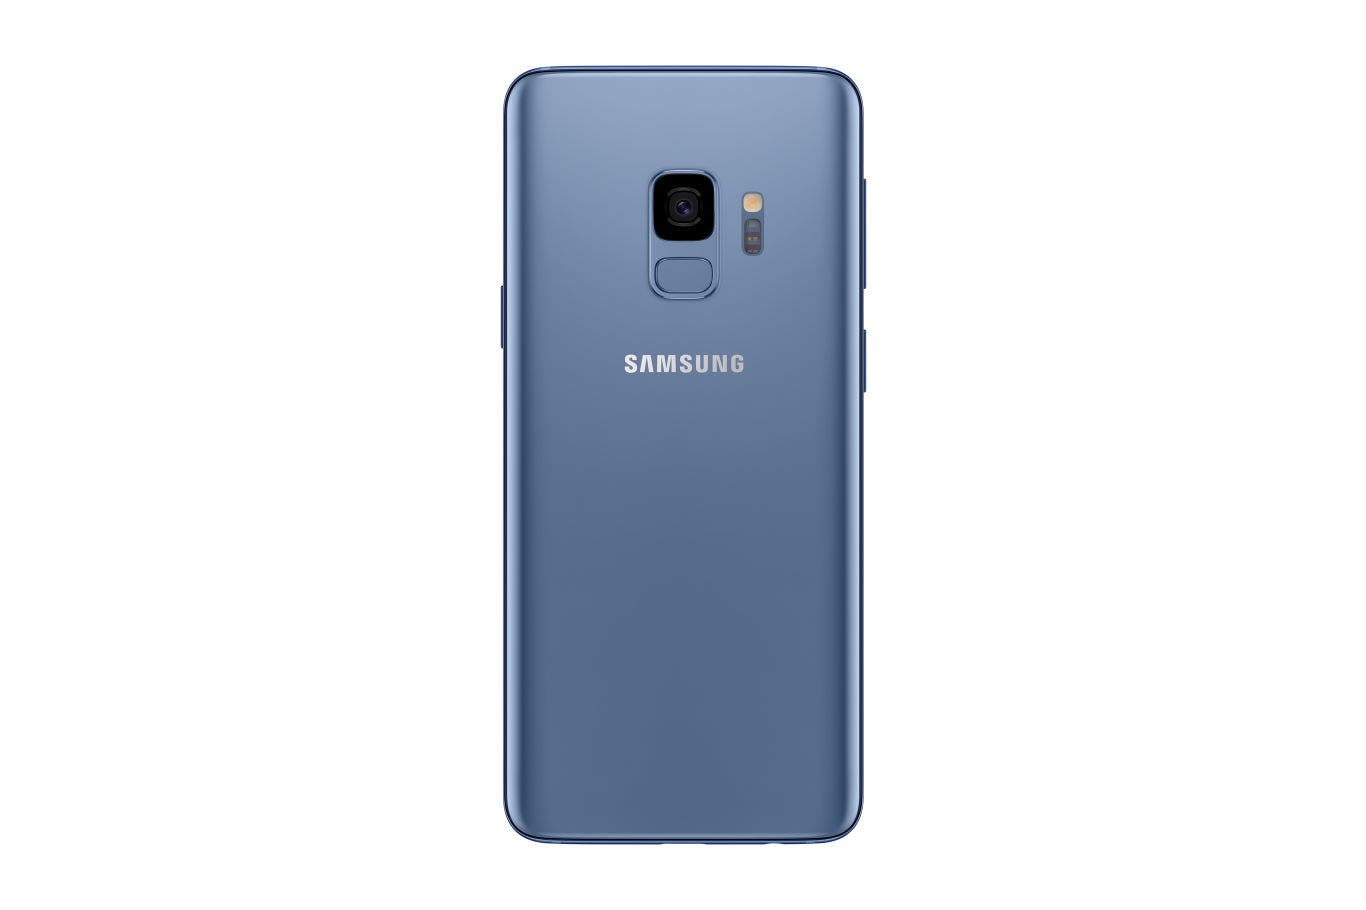 Design and Specs Samsung Galaxy S9 and S9 Gizchina com